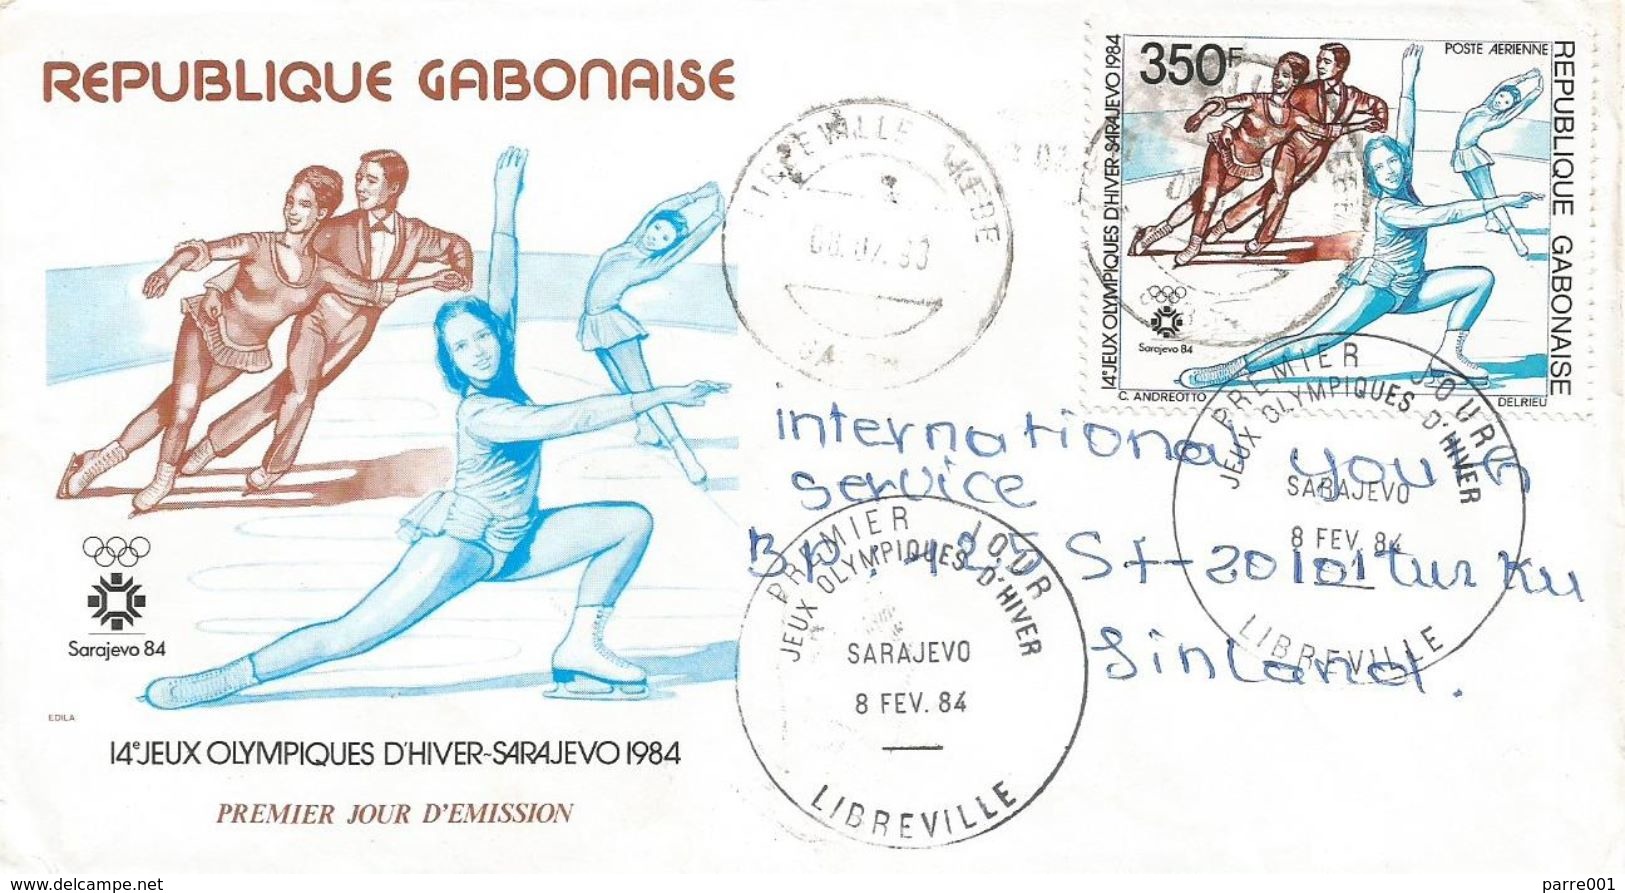 Gabon 1984 Libreville Olympic Games Sarajevo Figure Skating FDC Cover - Figure Skating